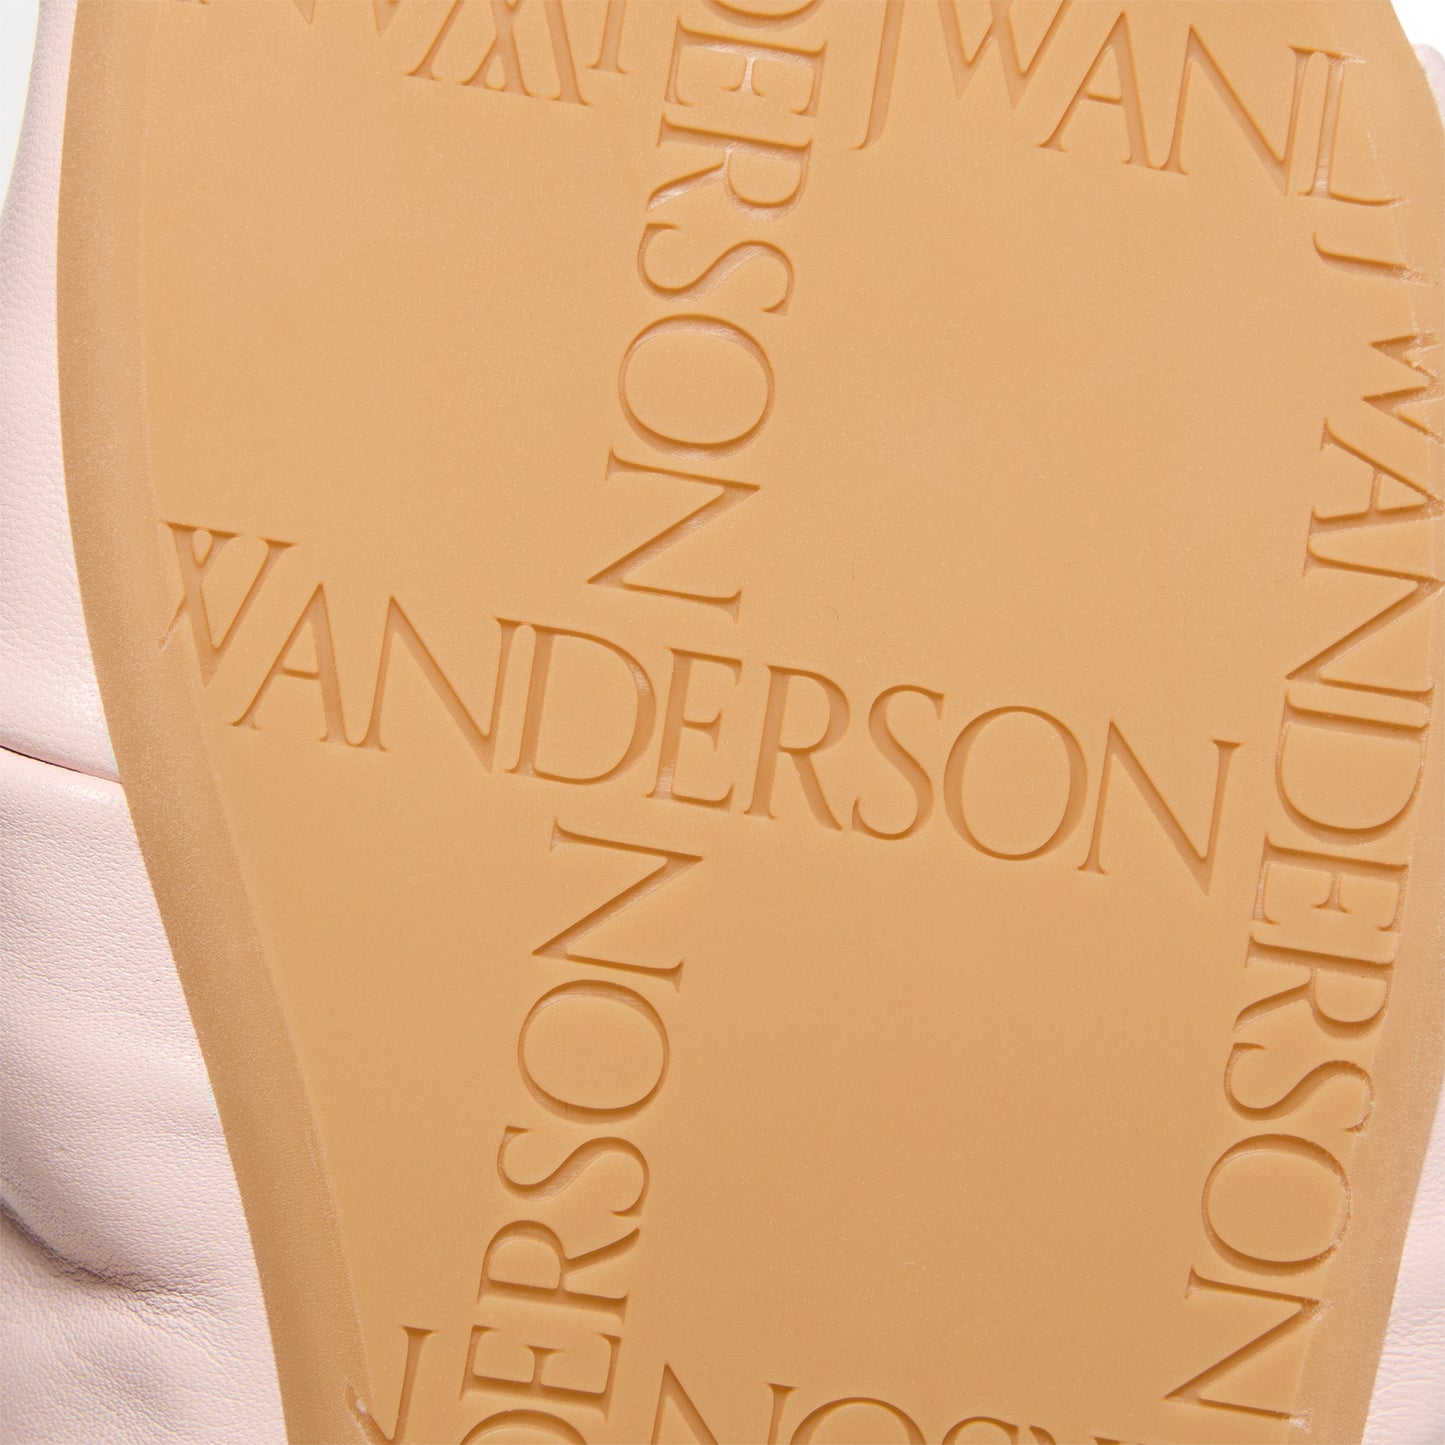 JW Anderson Corner Leather Sandal (Pink)